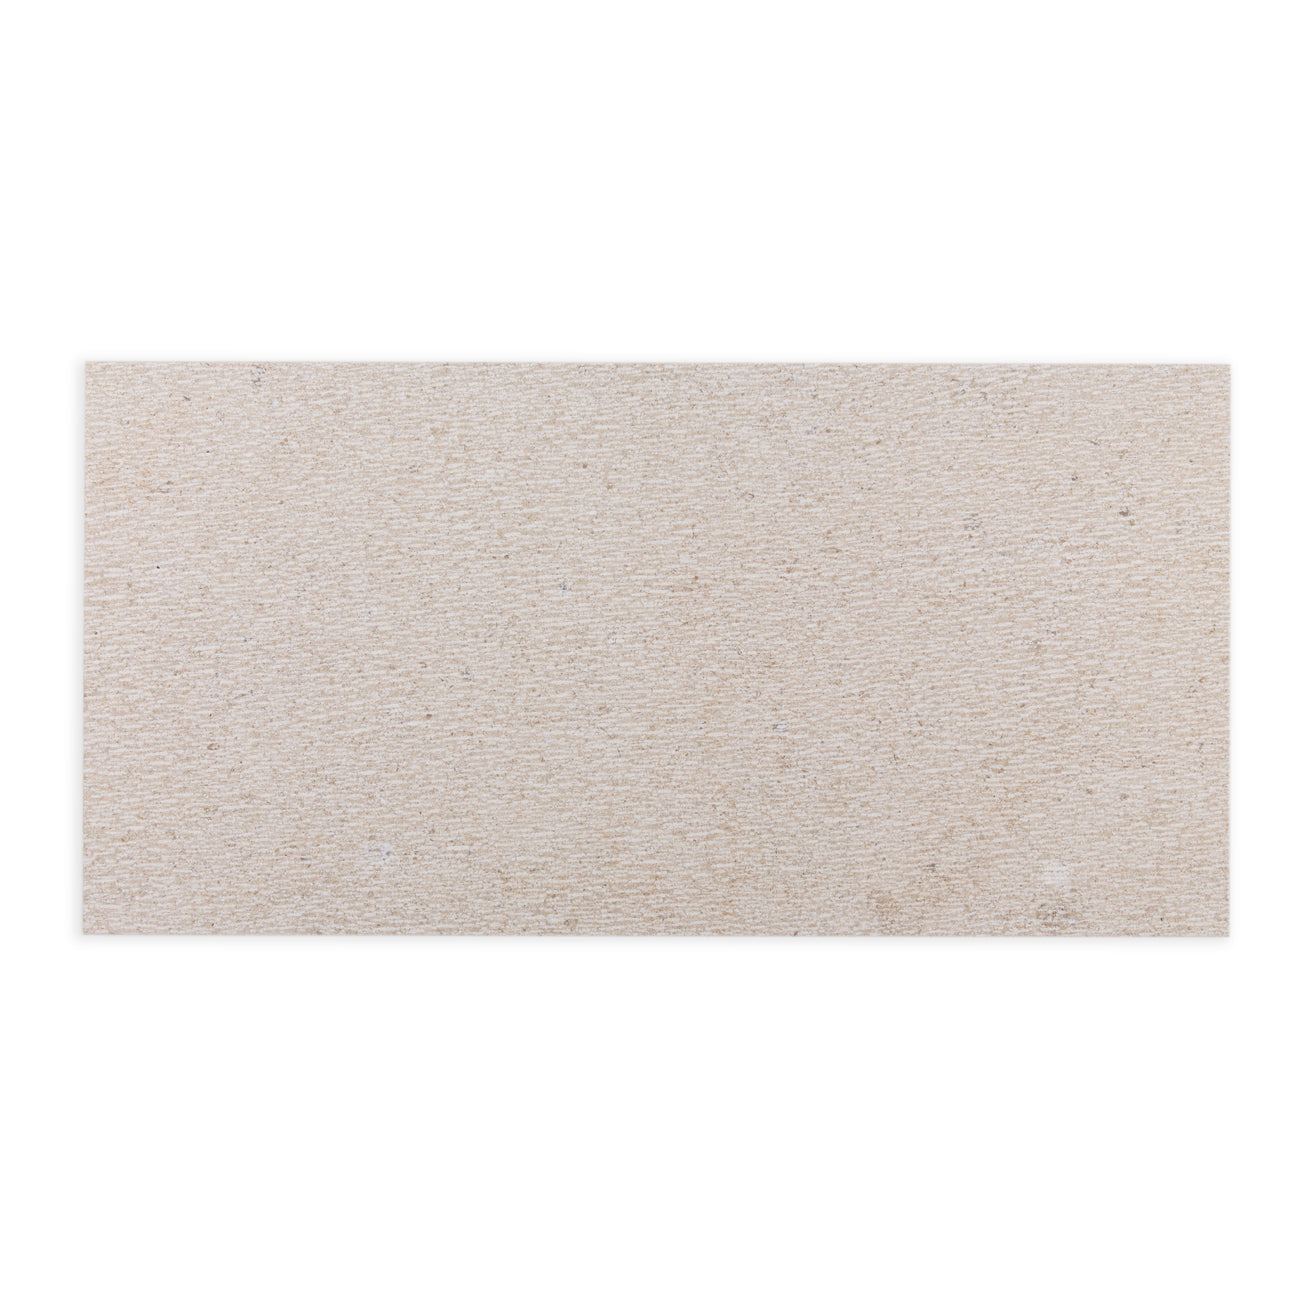 haussmann fonjone gascogne beige limestone rectangle natural stone field tile 12x24 linen